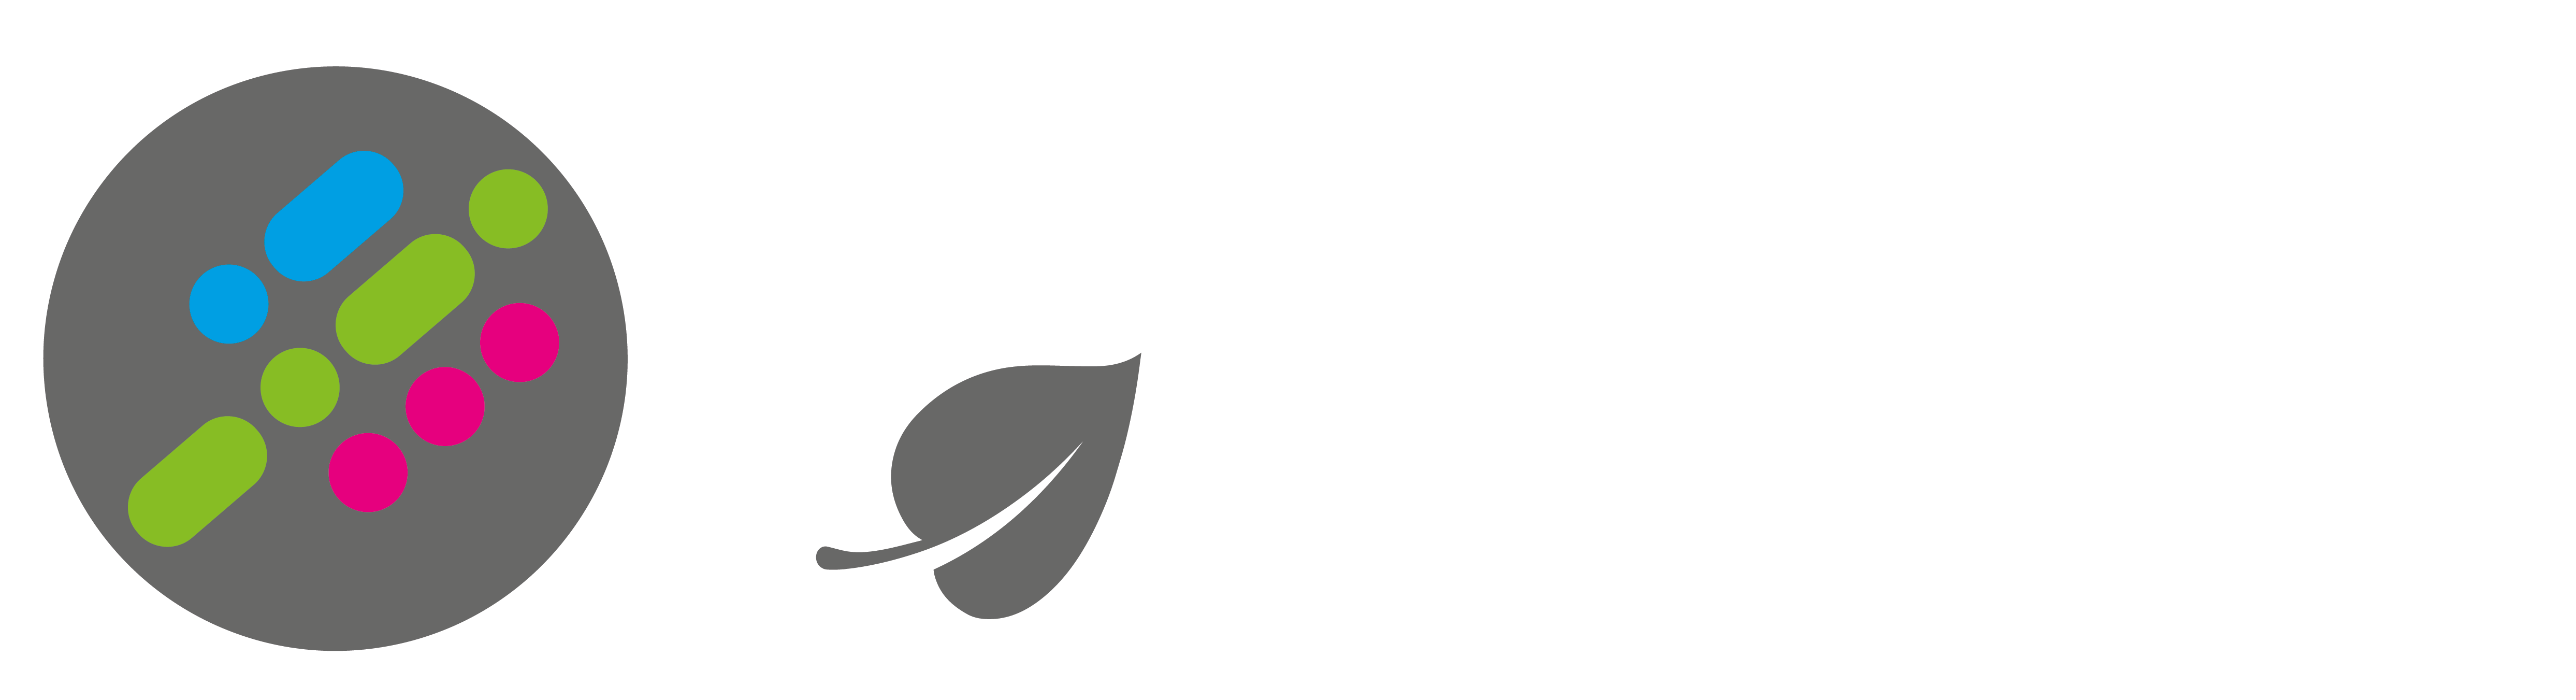 About Acument Concept Service Logo